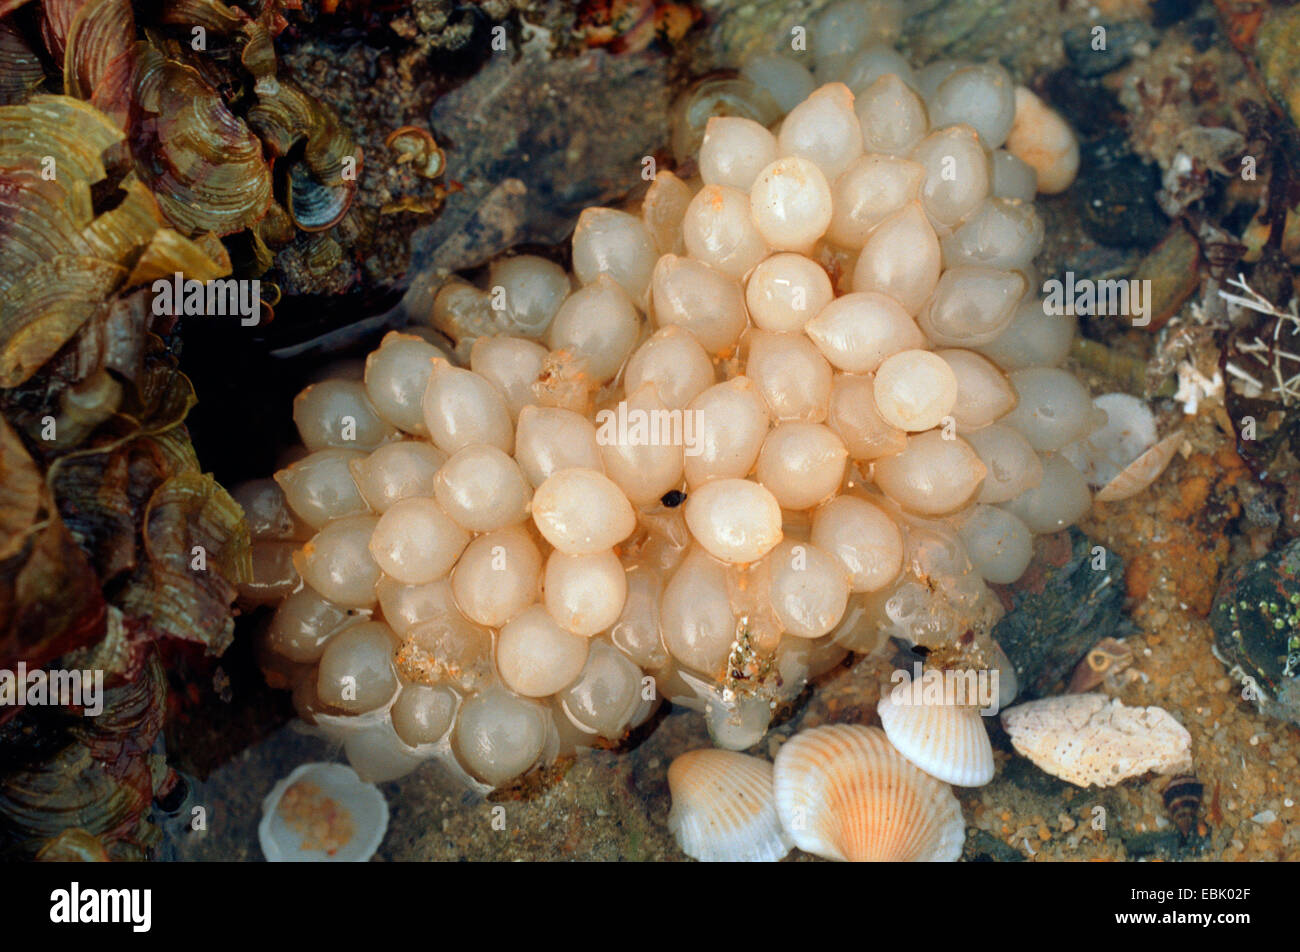 calamary eggs, Malaysia Stock Photo